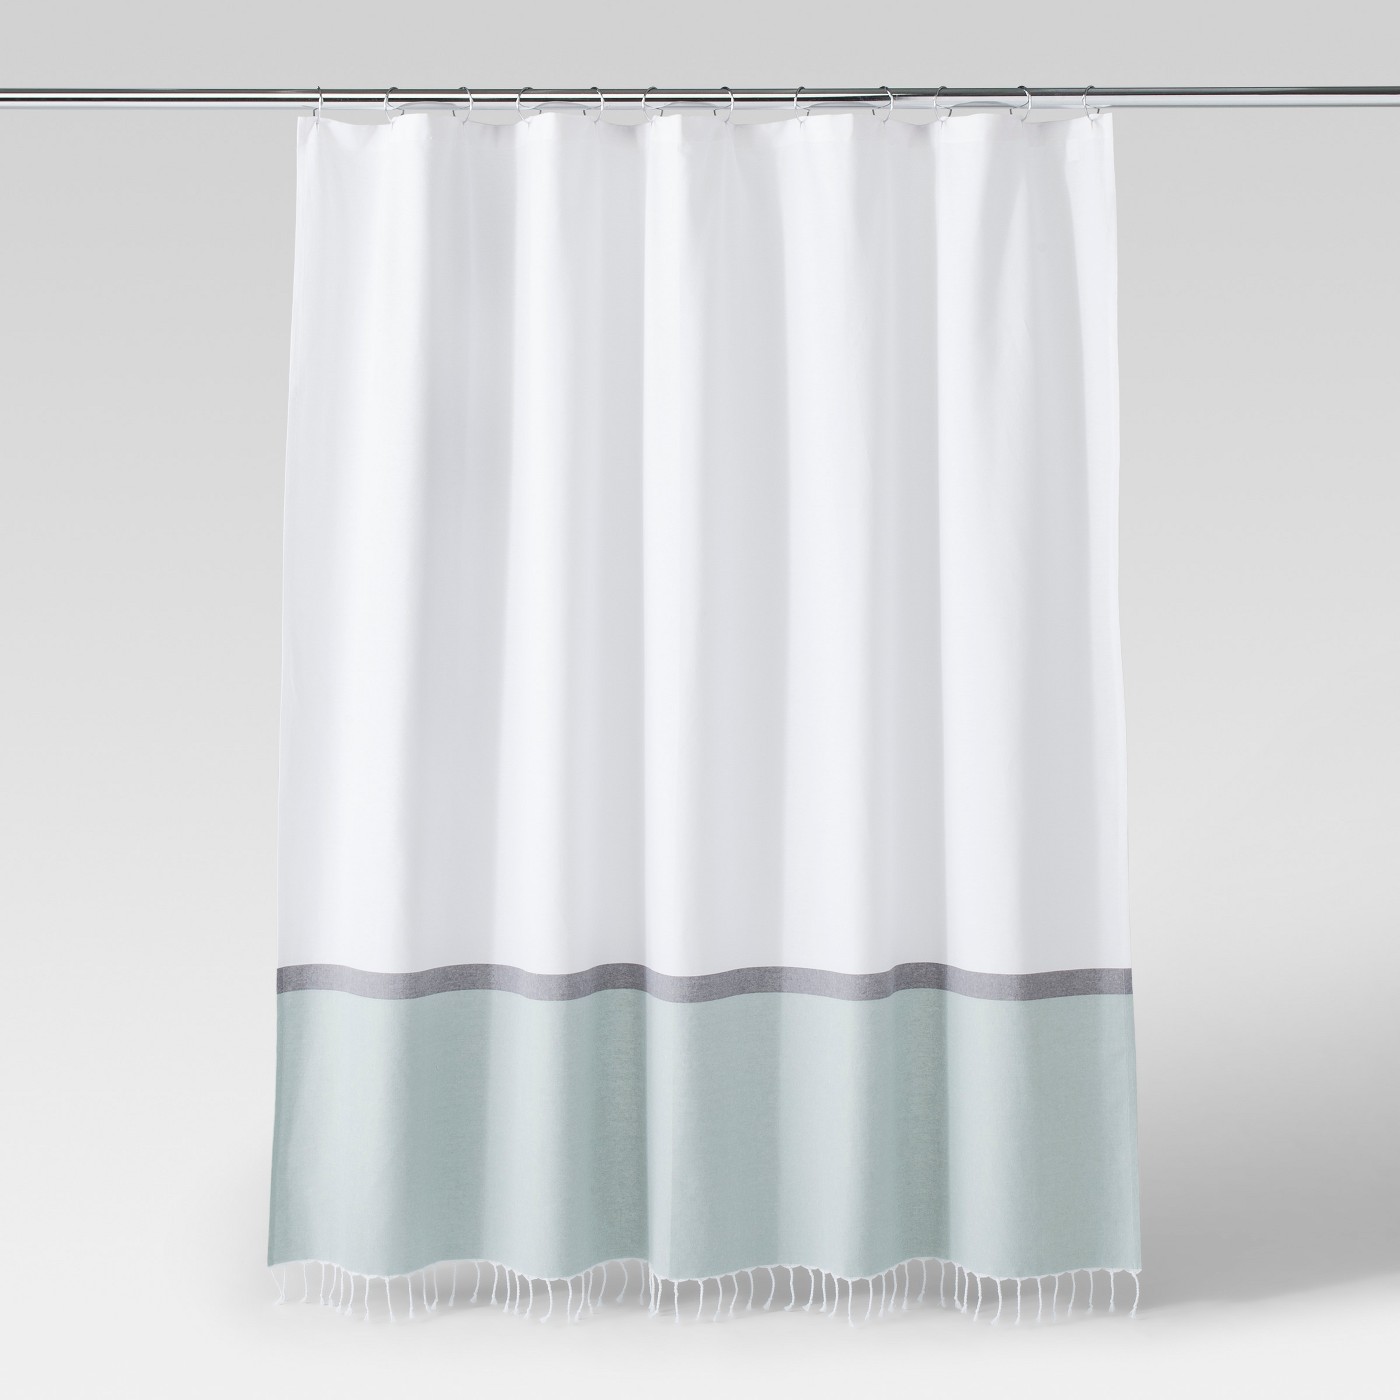 Curtain (similar)